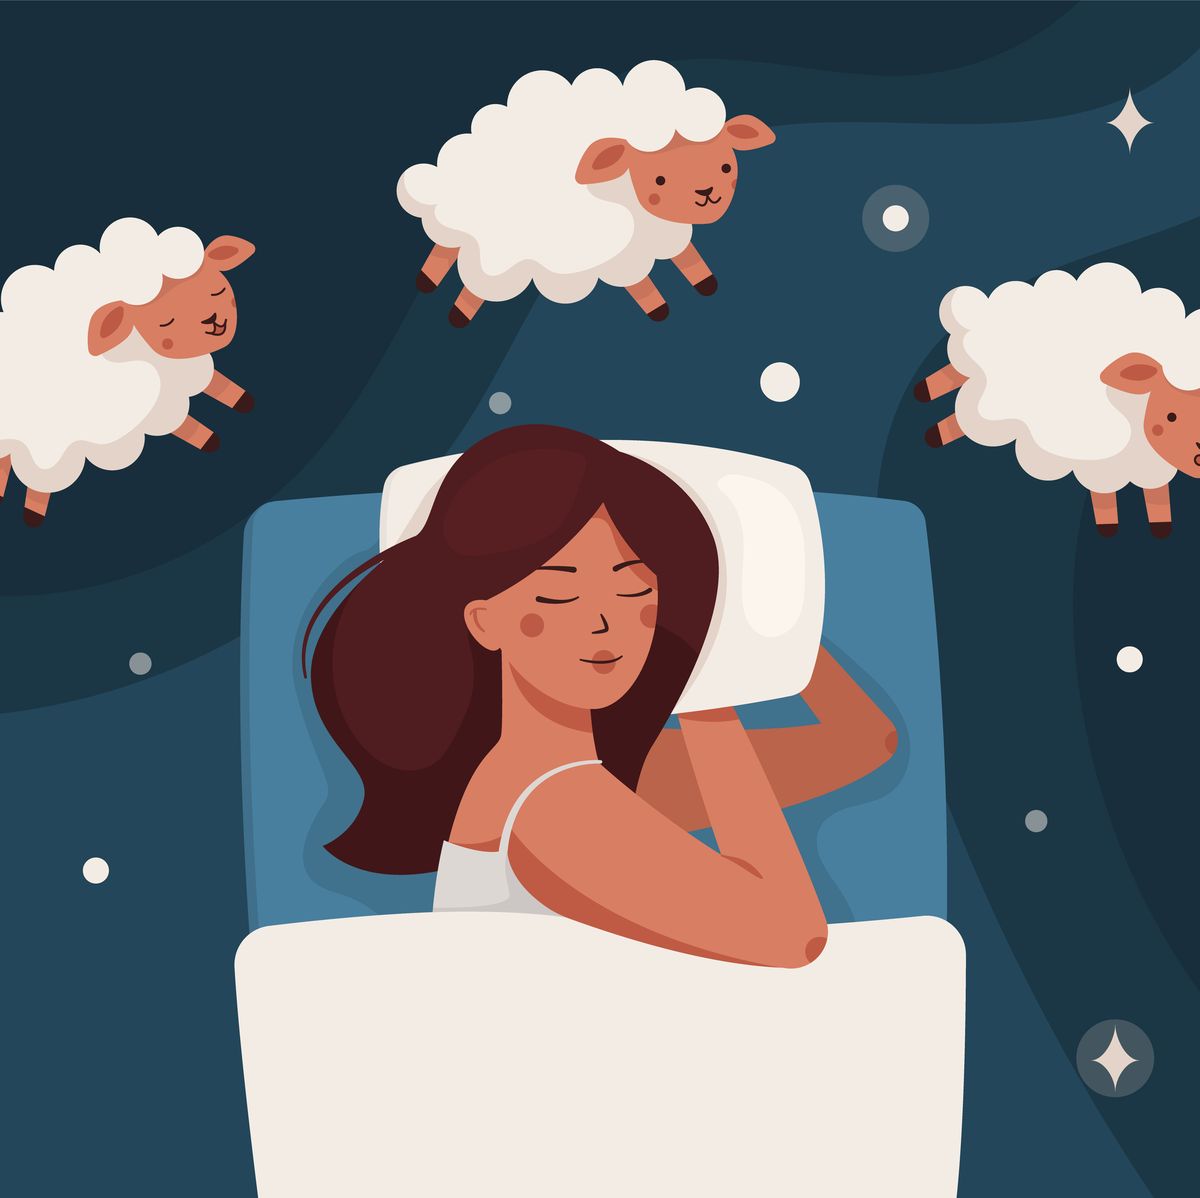 Pin on Sleep Better. Health and Guidance